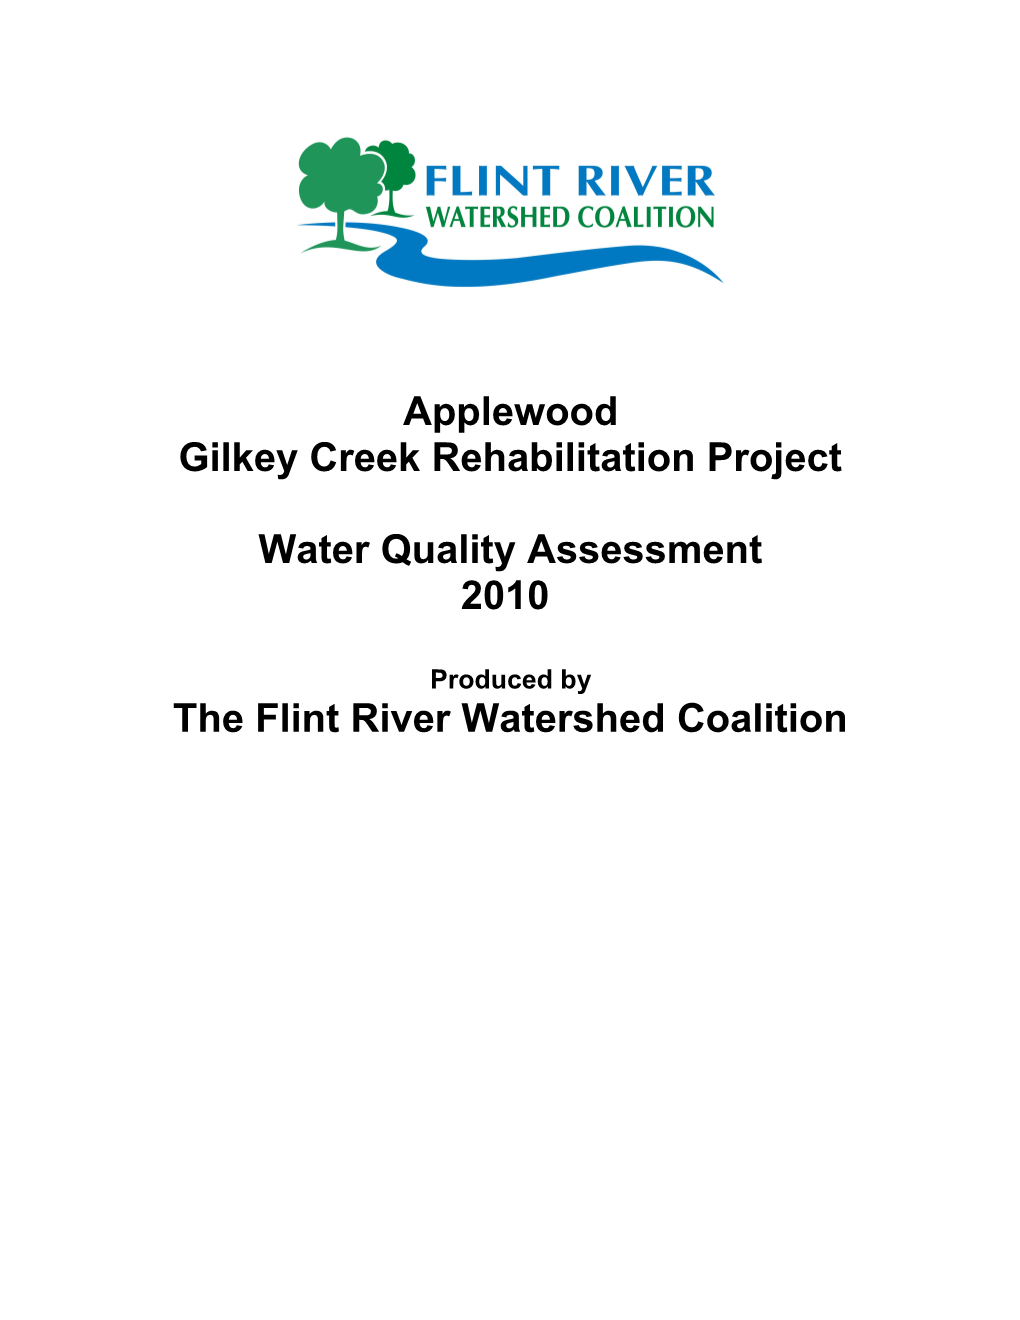 Gilkey Creek Rehabilitation Project